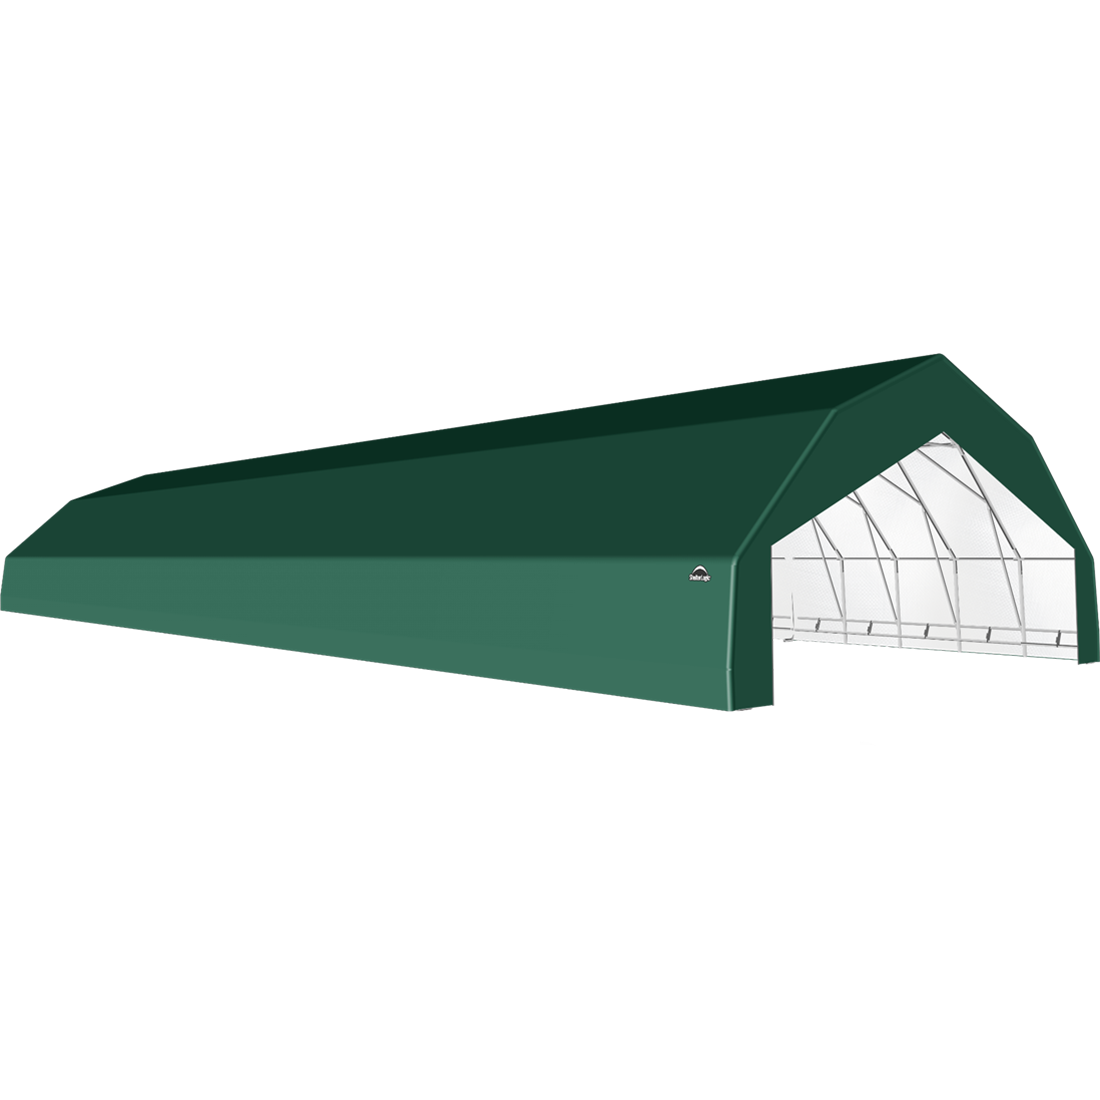 ShelterTech SP Series Barn Shelter, 30 ft. x 96 ft. x 15 ft. Heavy Duty PVC 14.5 oz. Green